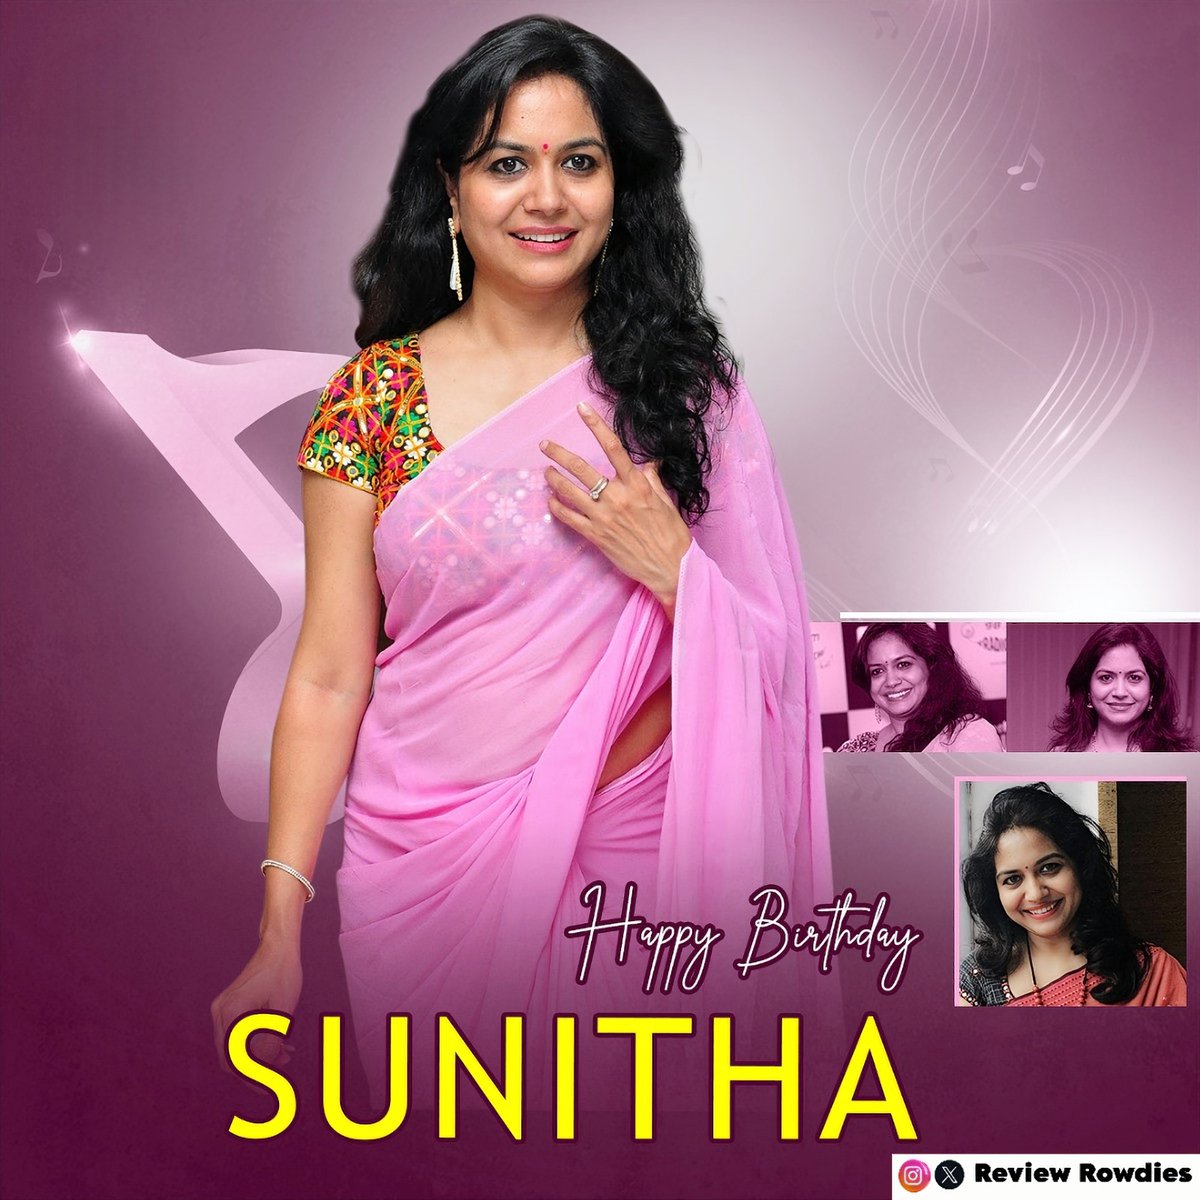 Wishing singer Sunitha a very Happy Birthday 

#Sunitha #HappyBirthdaySunitha #SingerSunitha #SunithaUpadrushta #Reviewrowdies